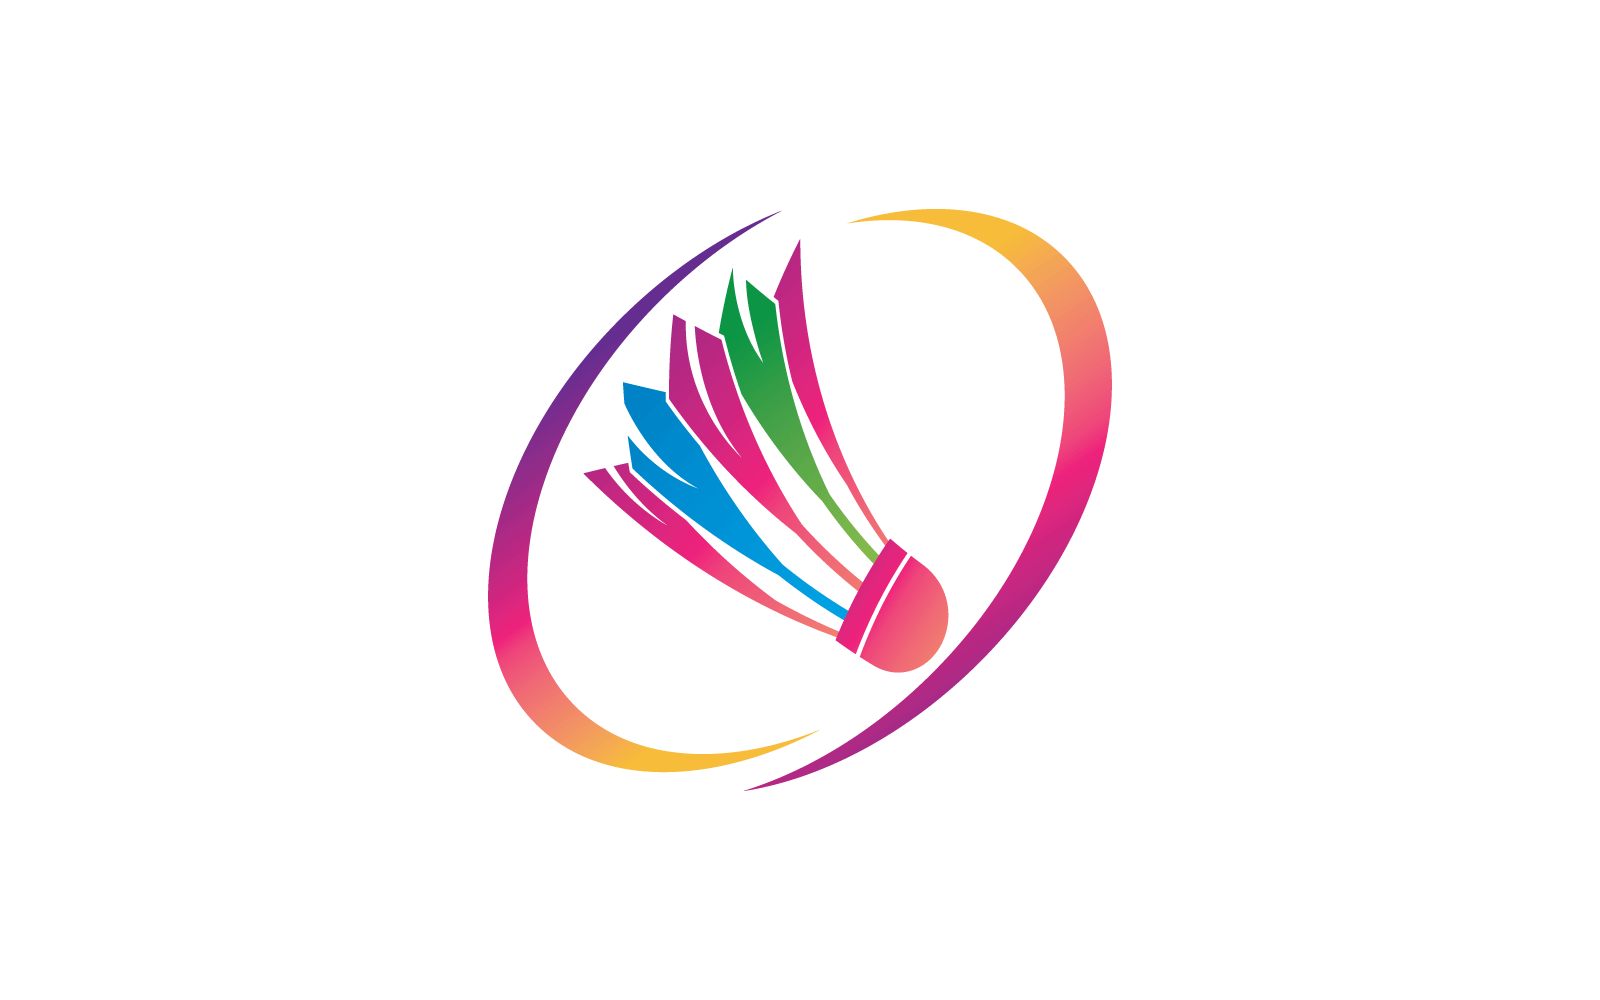 Suttle cock badminton logo illustration vector flat design Logo Template